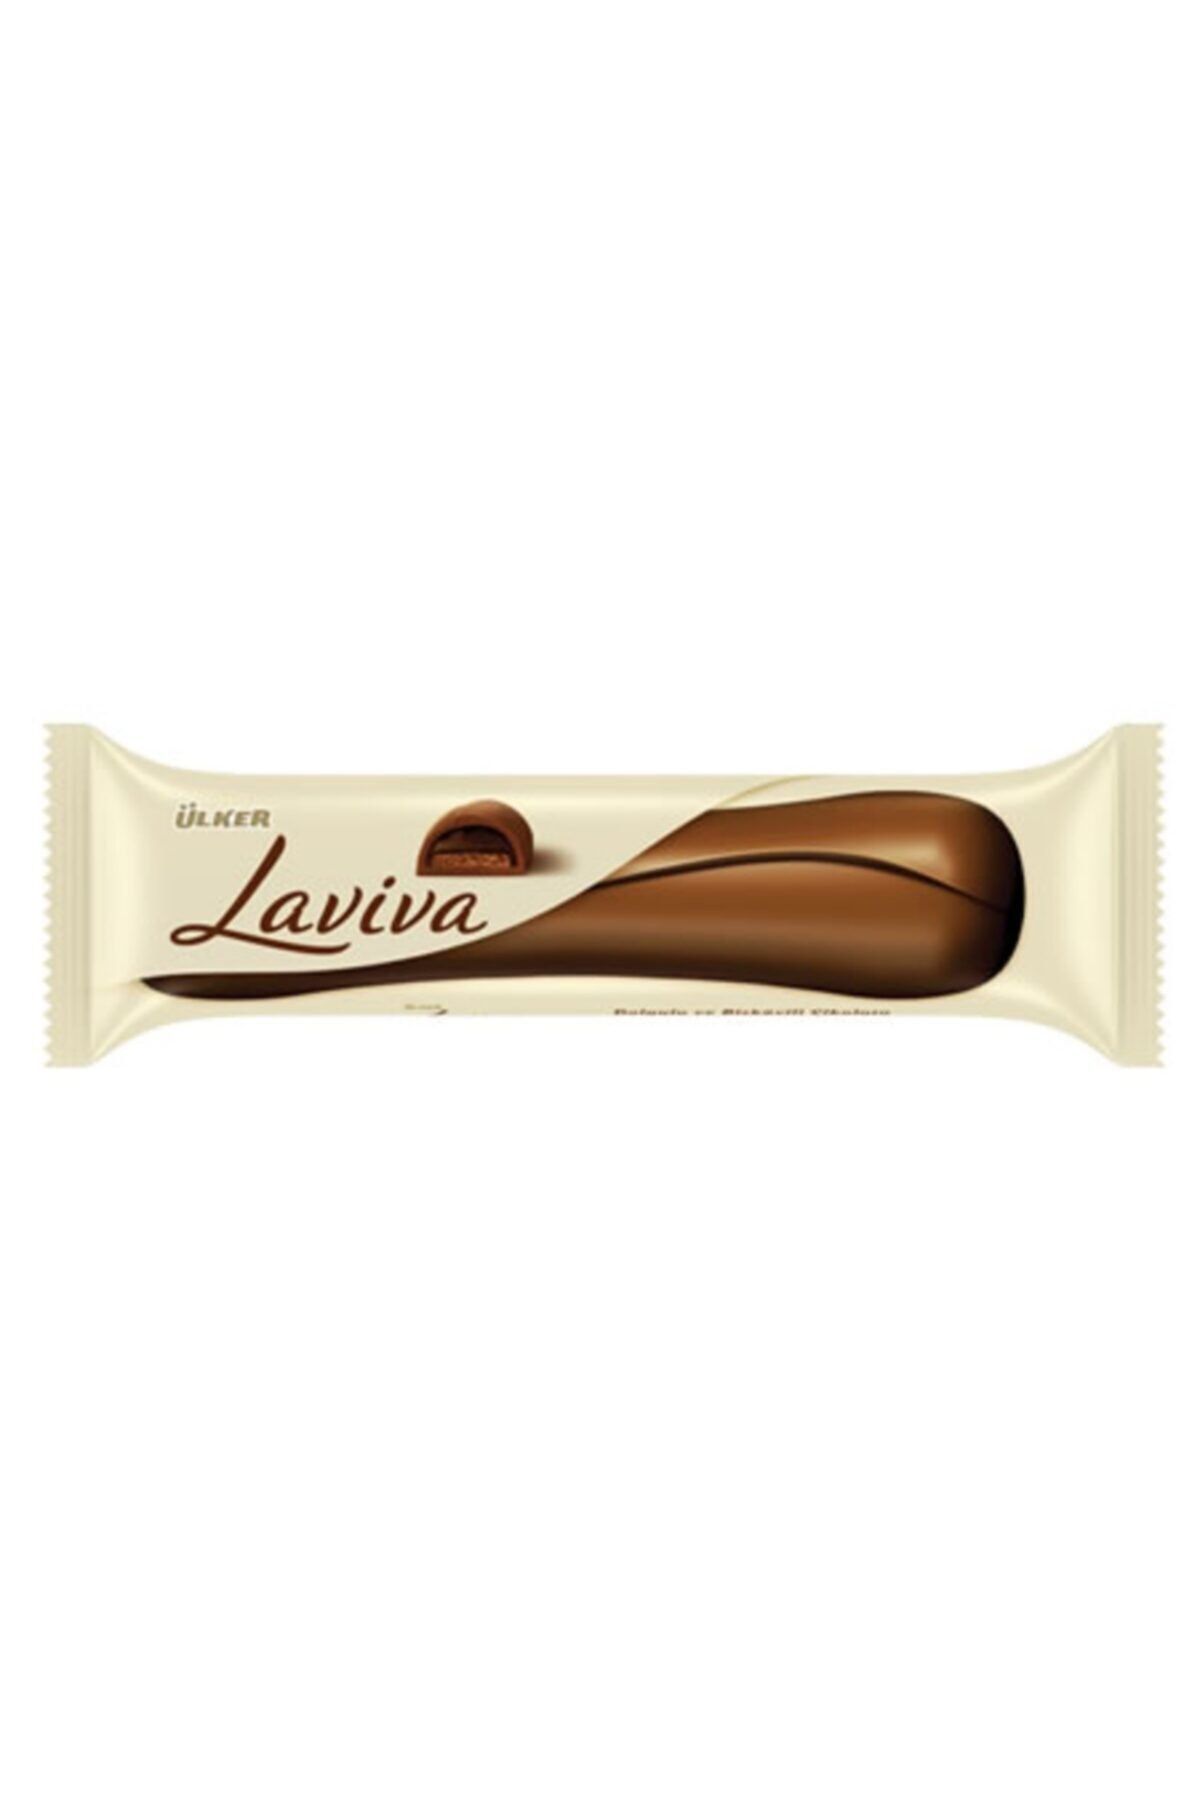 Ülker Laviva Dolgu Ve Bisküvi Çikolata 35 G 6 * Adet